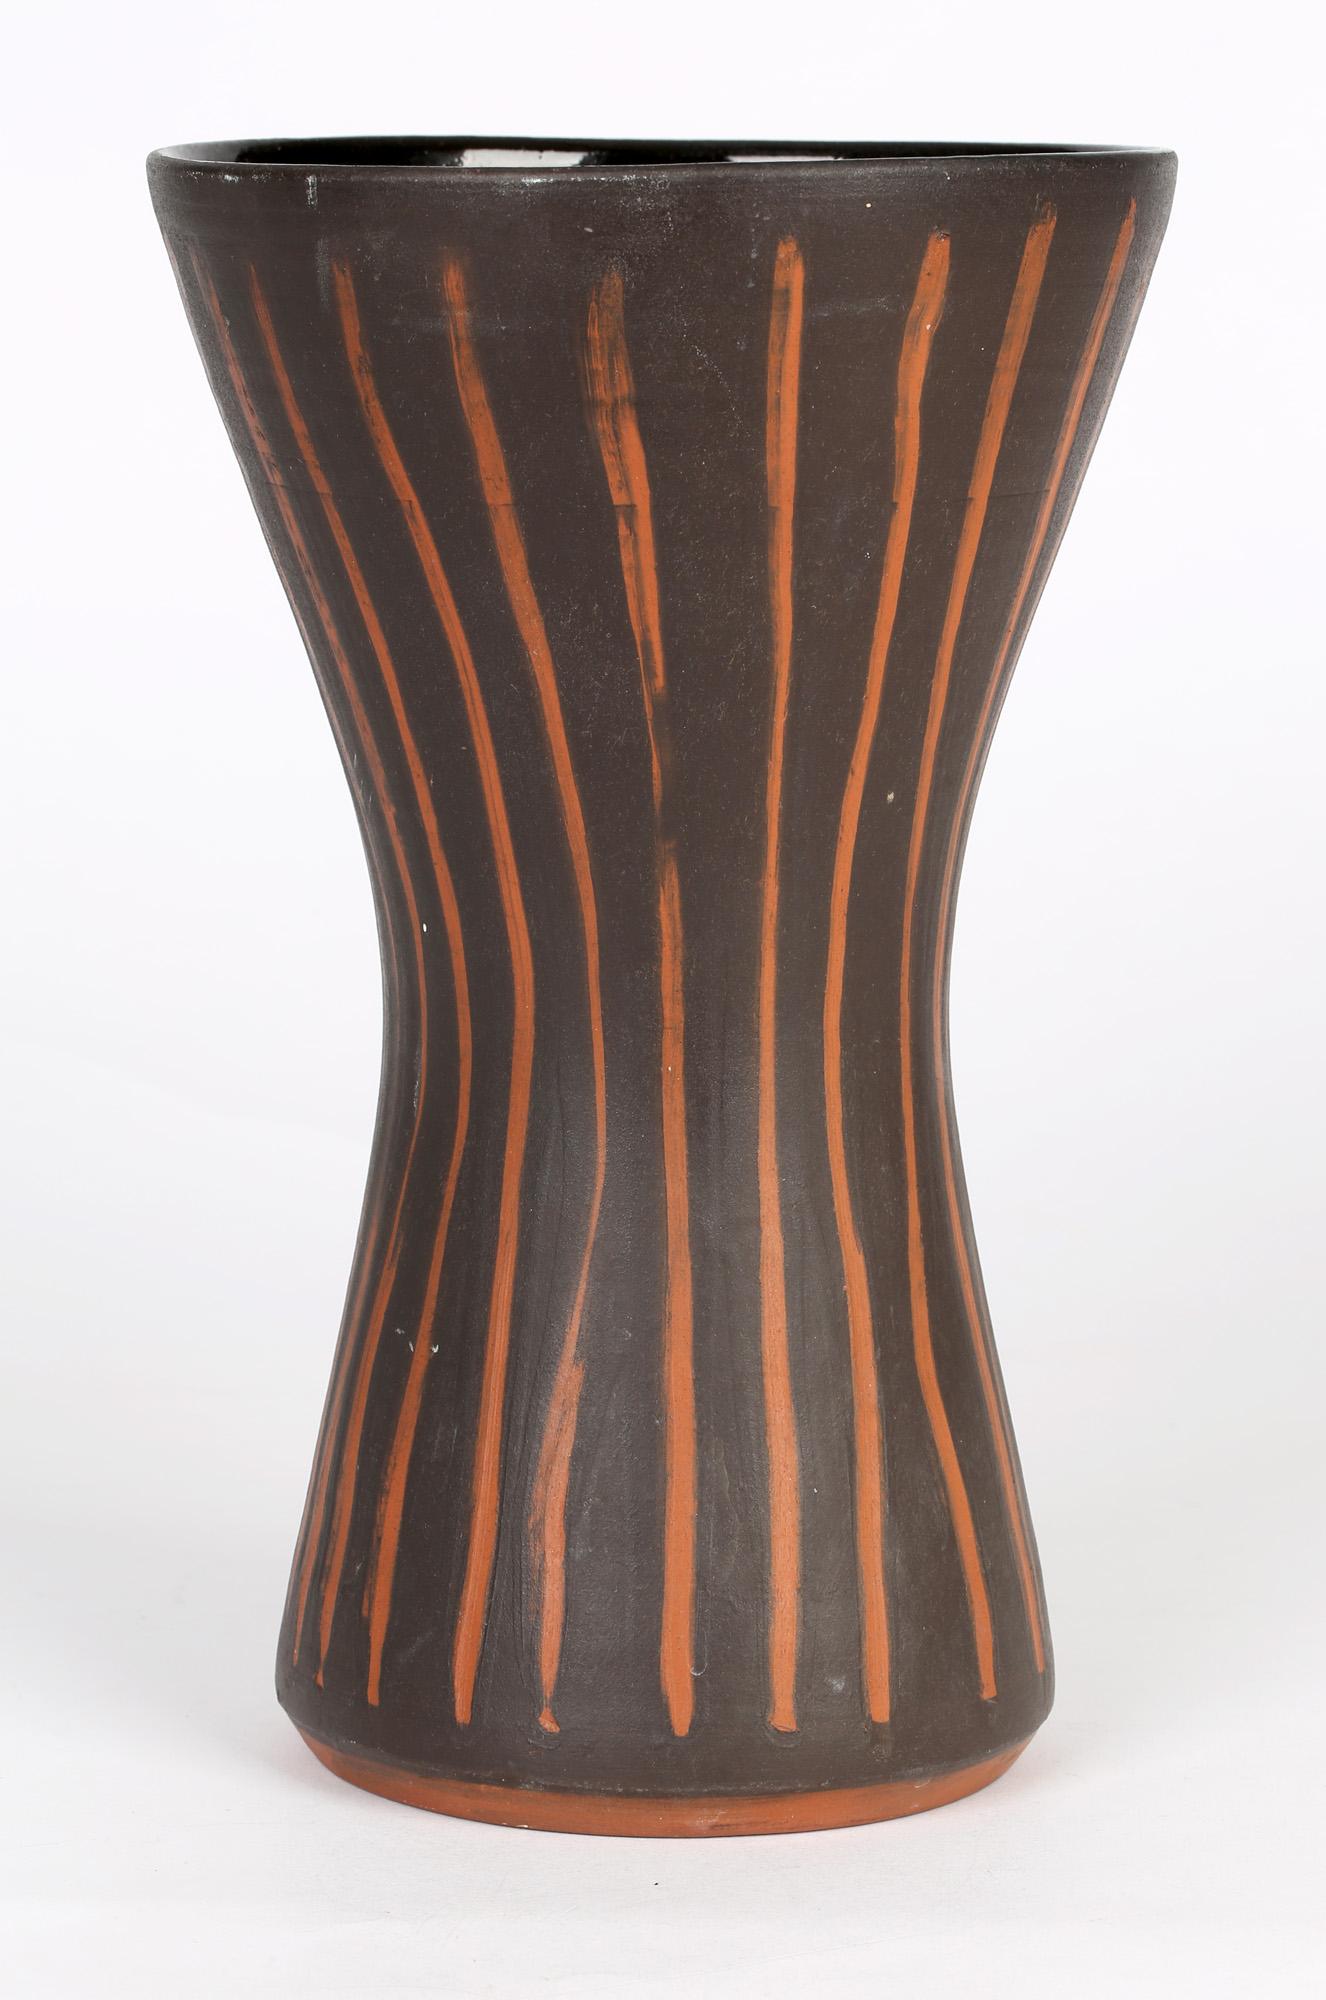 David Leach Vertical Line Design Large Studio Pottery Vase For Sale 4